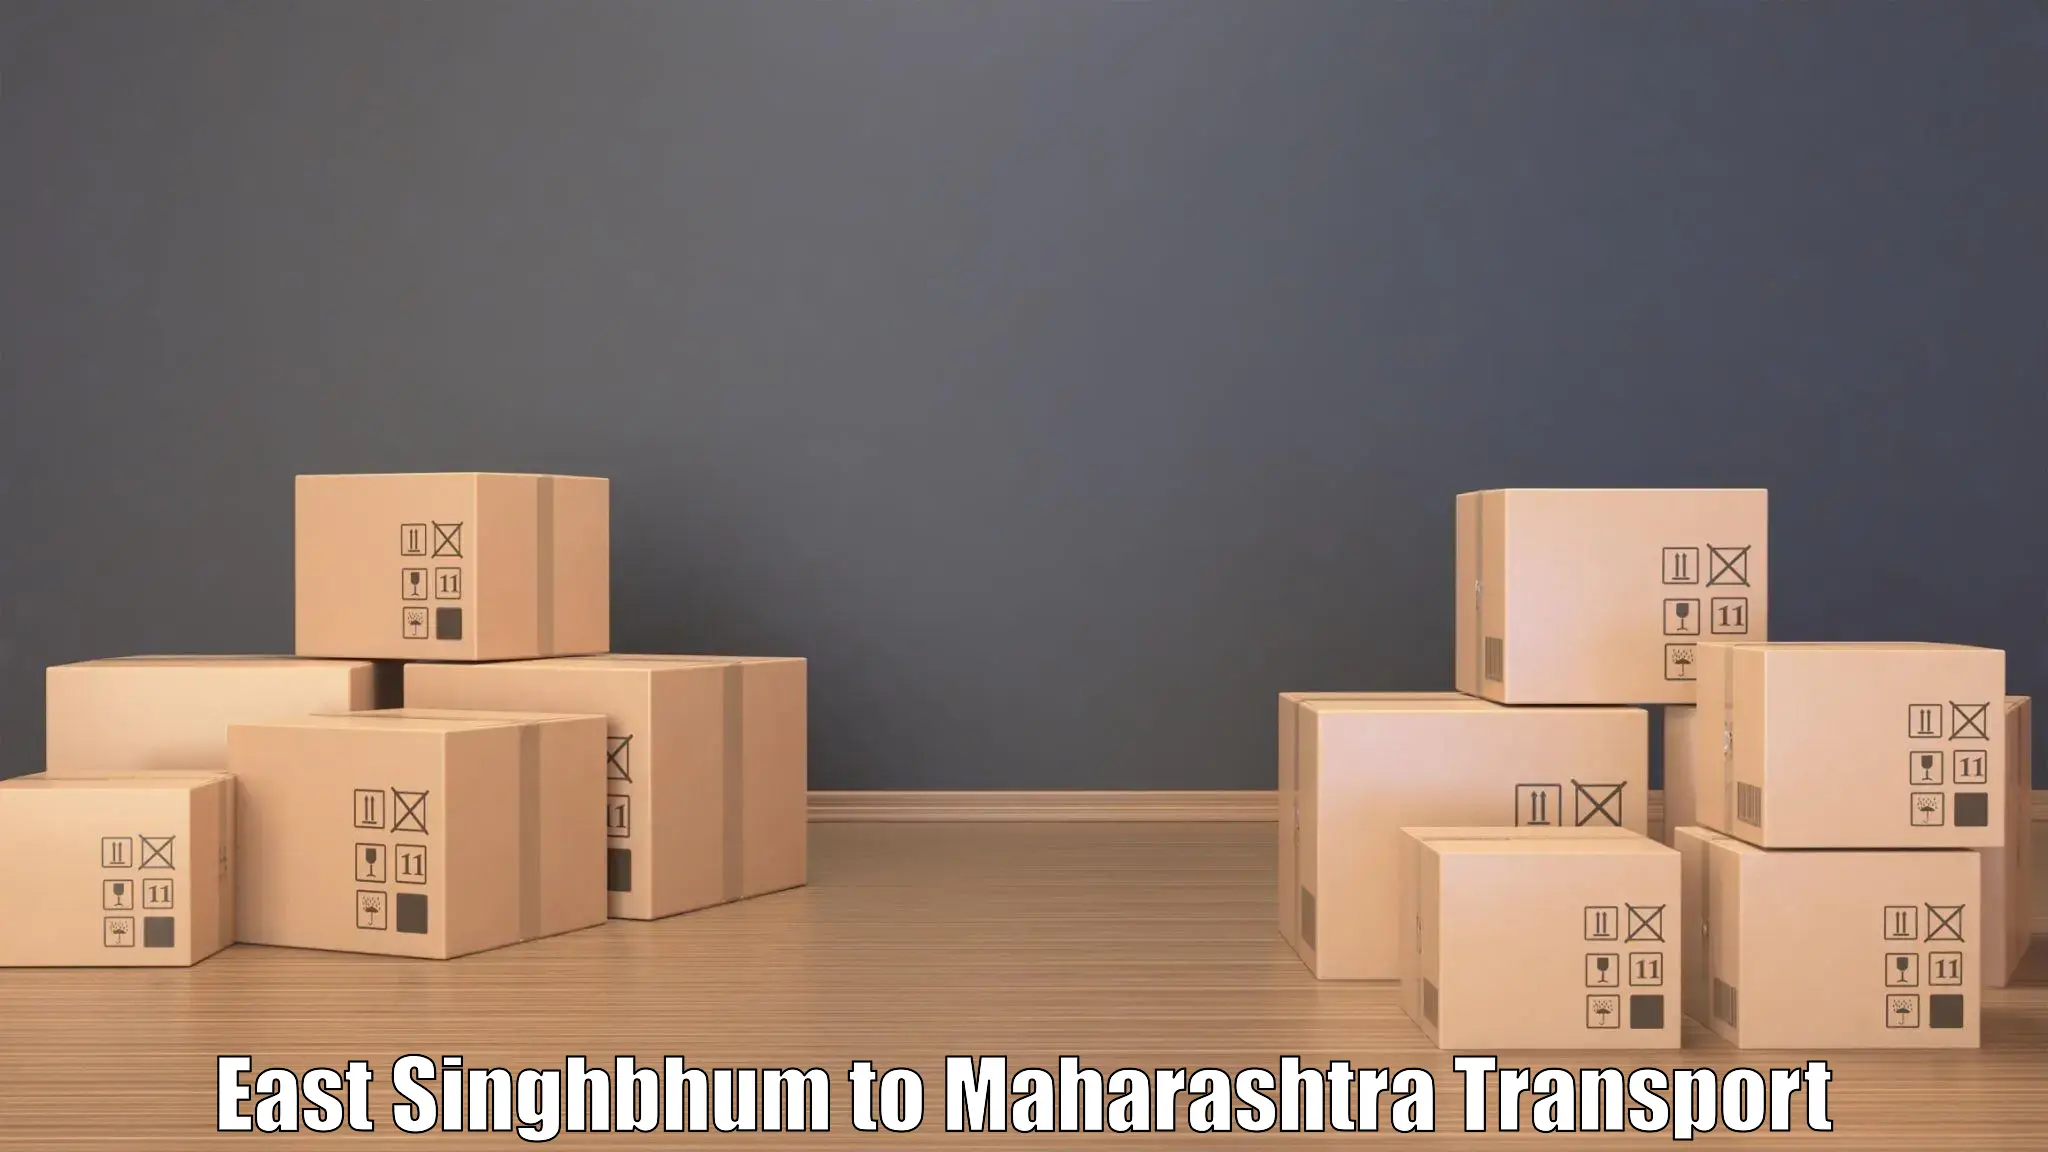 Truck transport companies in India East Singhbhum to Gondpipri